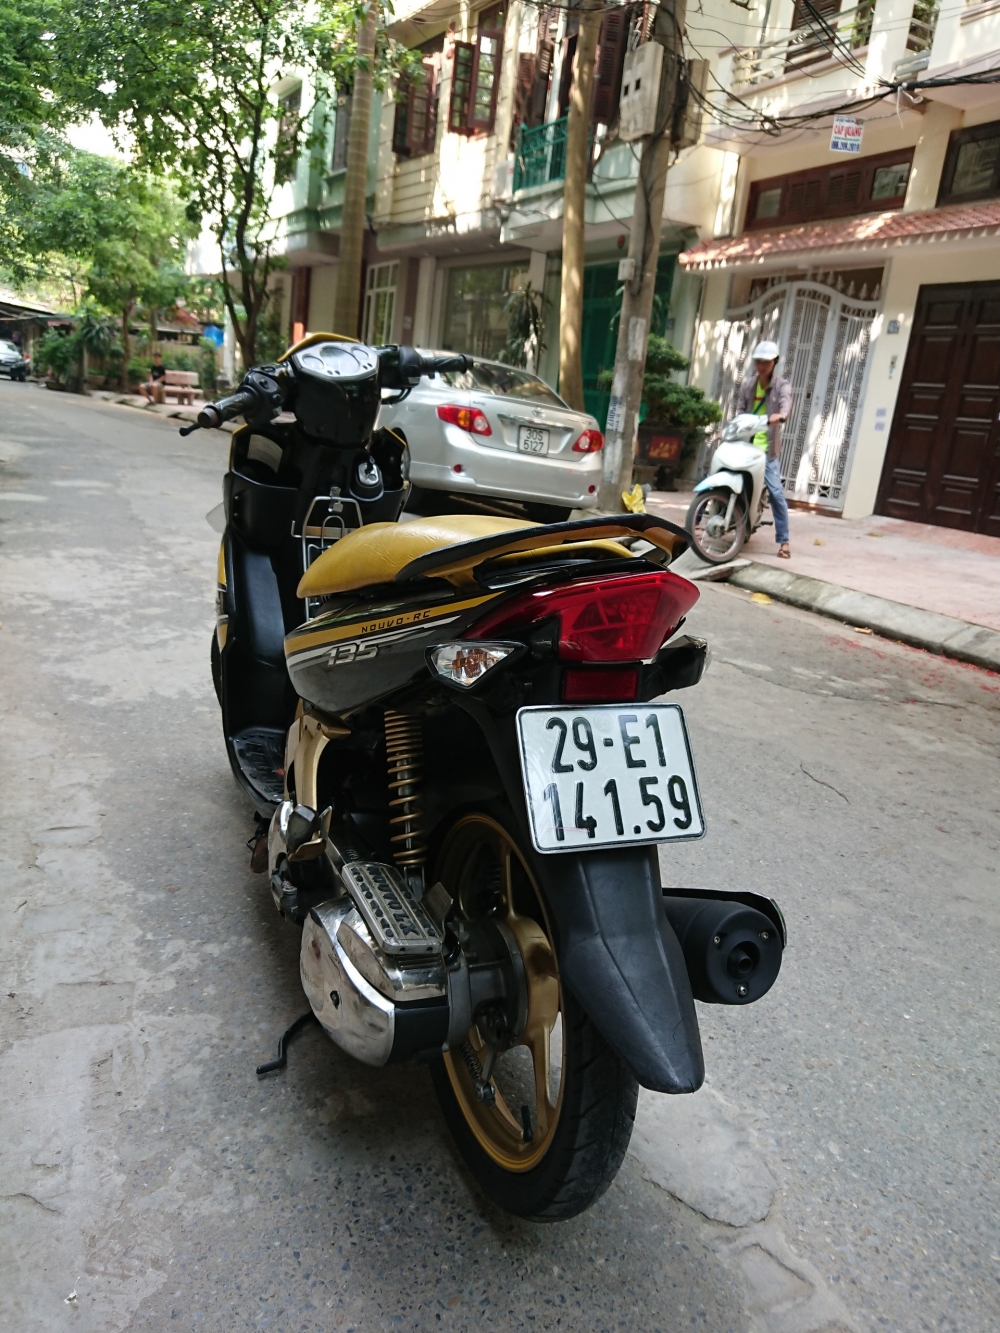 Ban xe Yamaha Nouvo lx 135RC den vang 2012 chat nguyen ban - 2